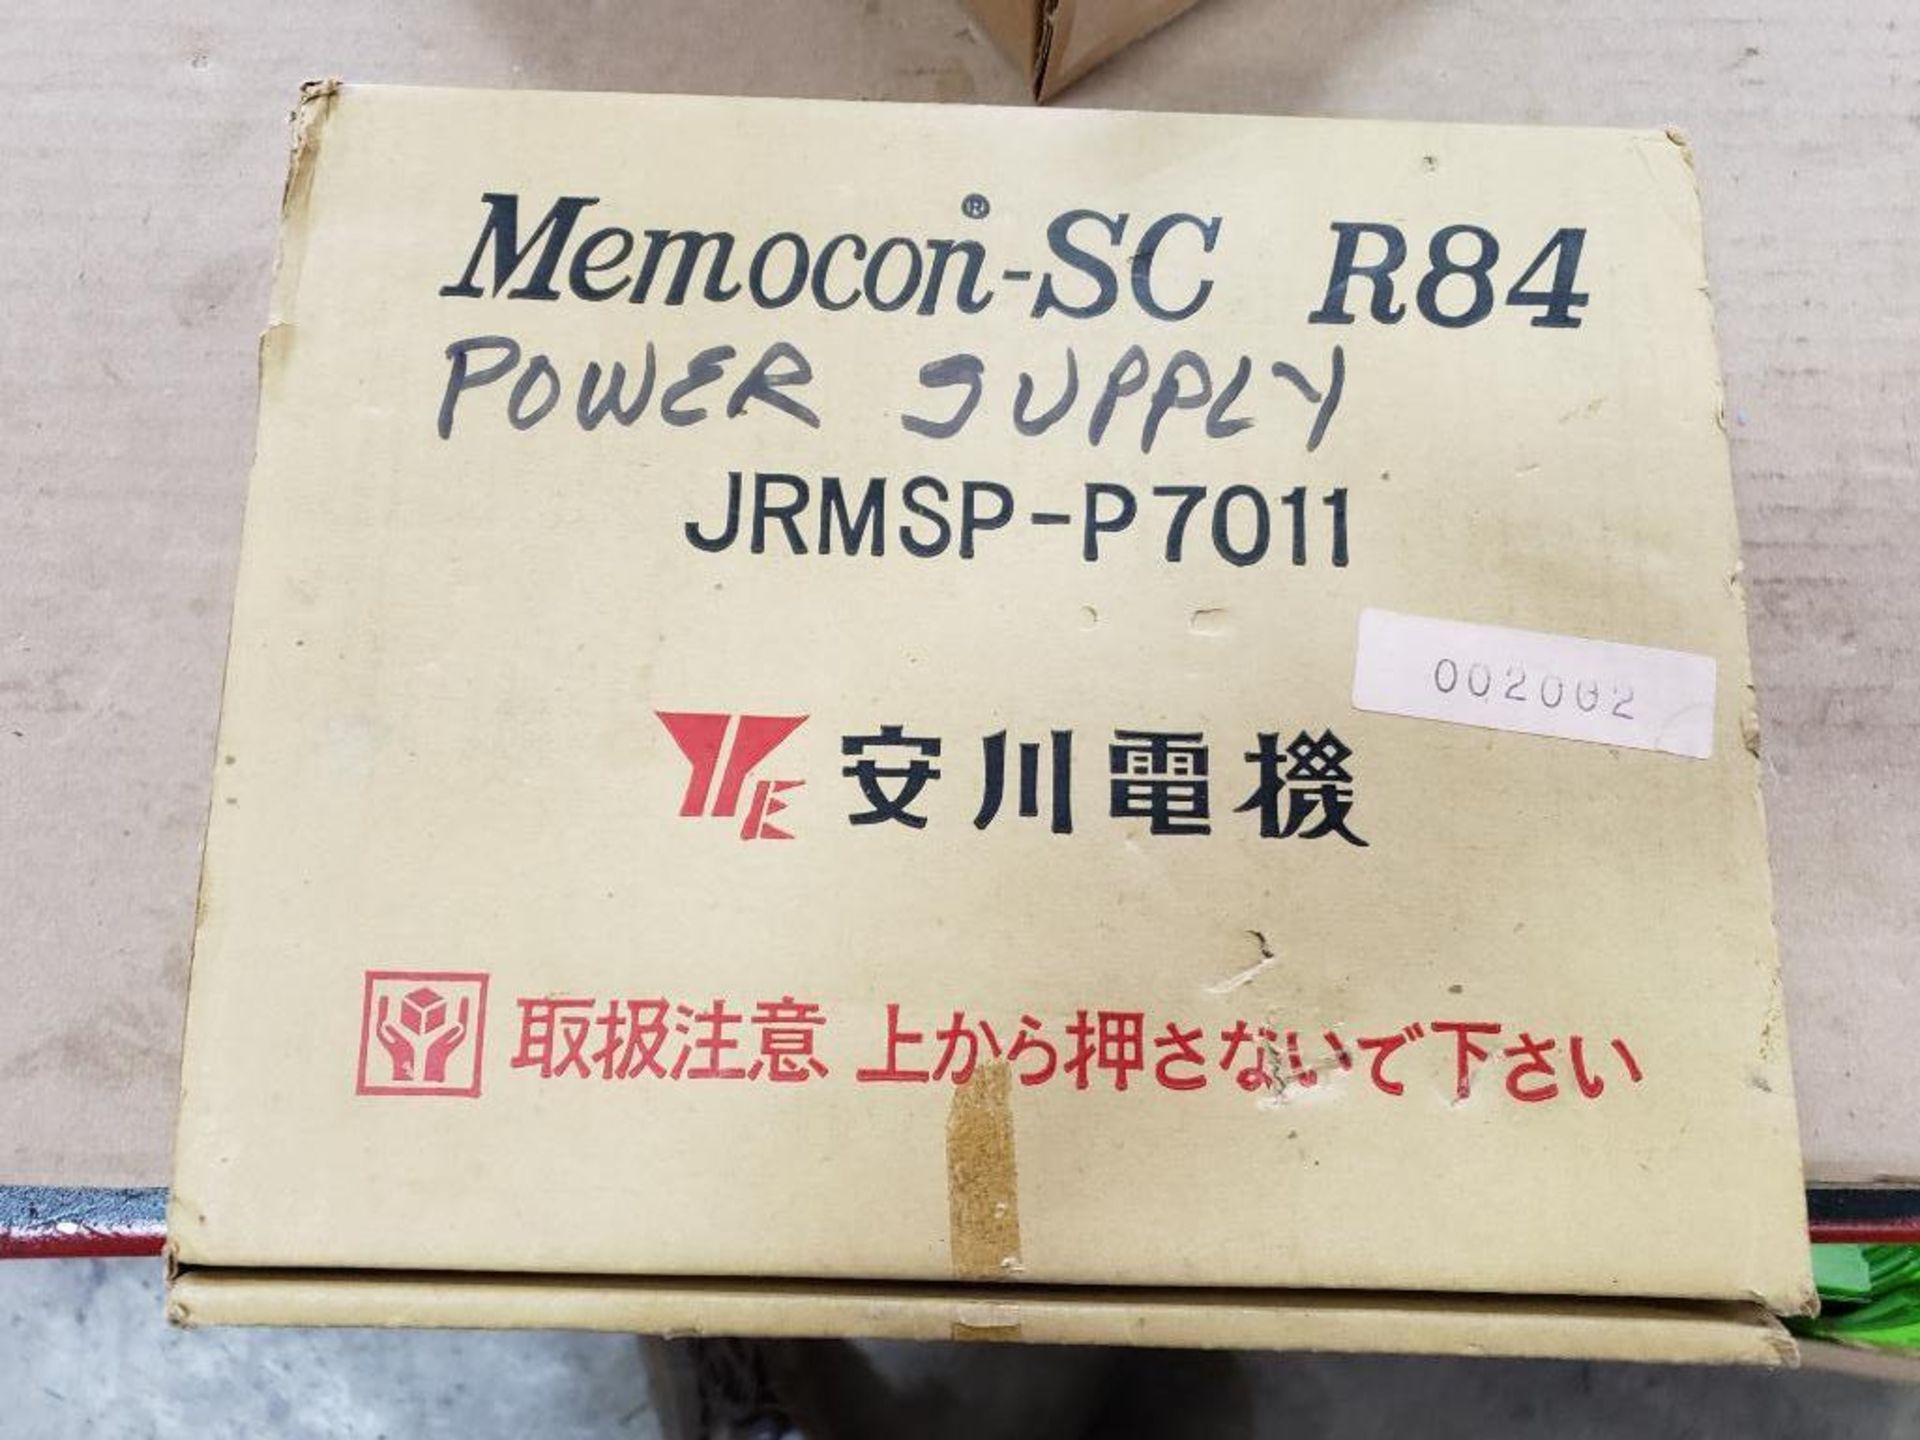 Yaskawa JRMSP-_7011 Memocon-SC power supply. - Image 2 of 4